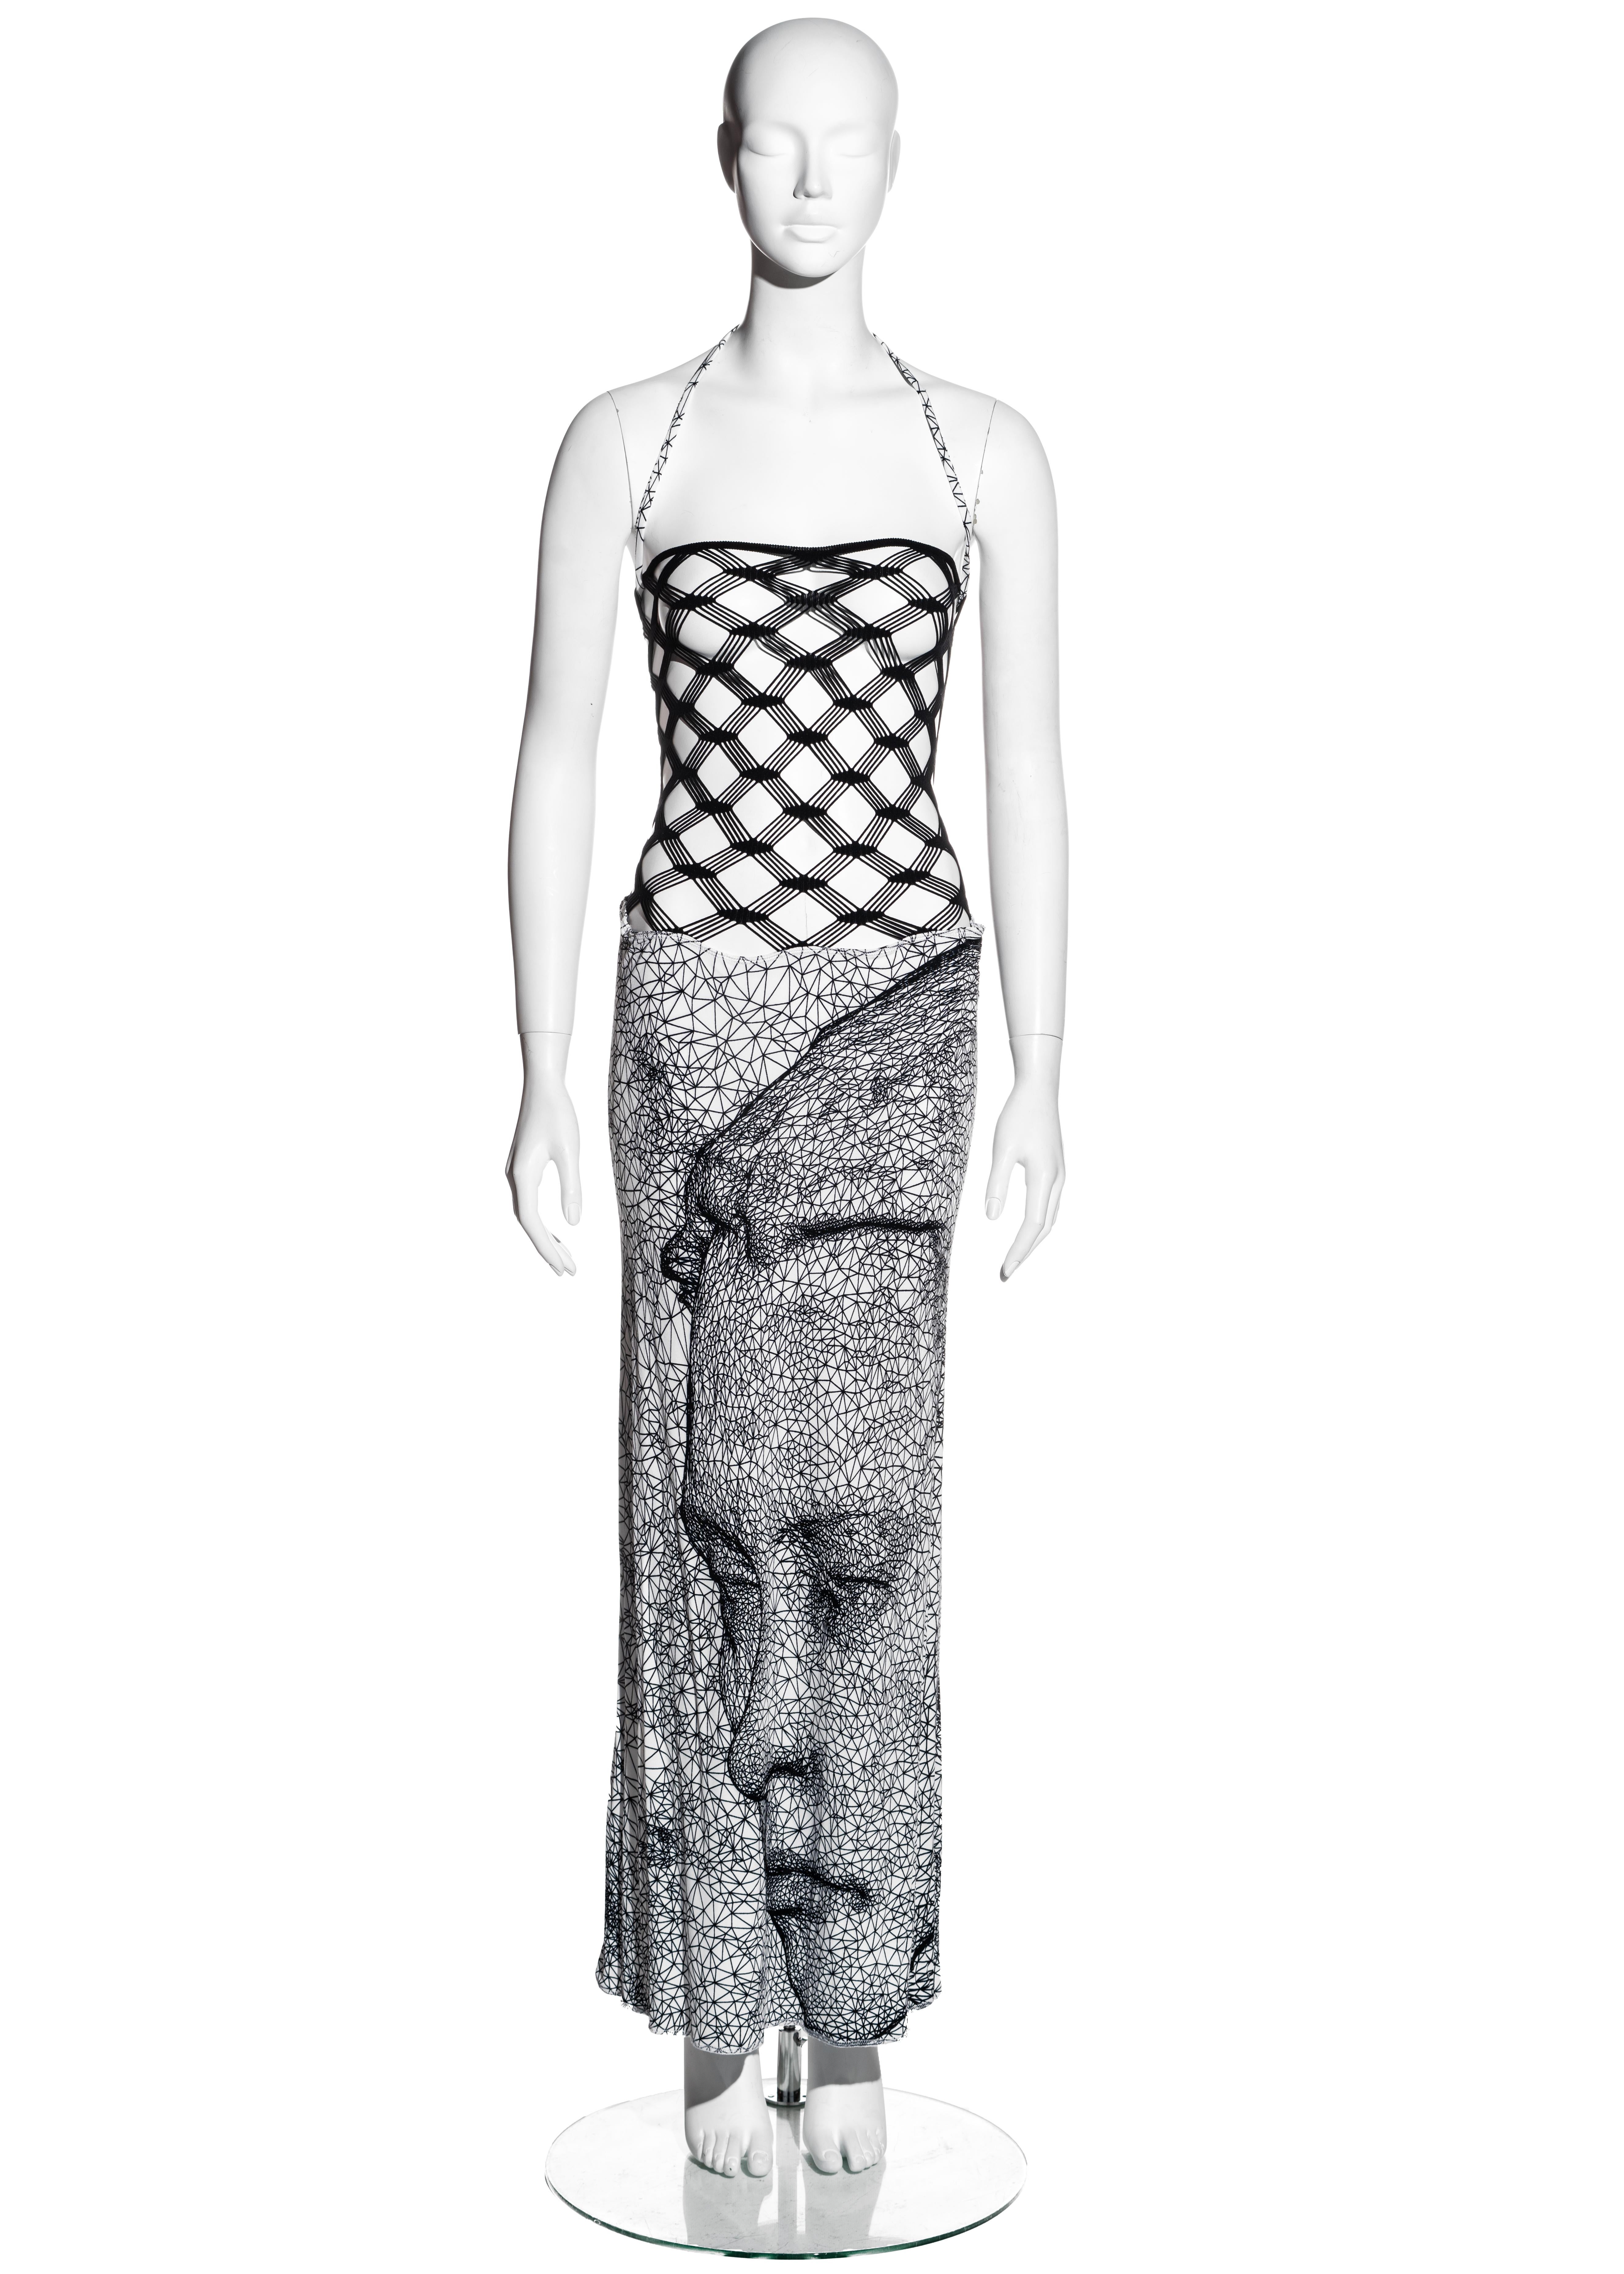 ▪ Jean Paul Gaultier black and white fishnet lycra maxi dress
▪ Black fishnet bodice
▪ Lycra maxi skirt with digital face print 
▪ Optional halter neck 
▪ Size Medium
▪ Spring-Summer 2001